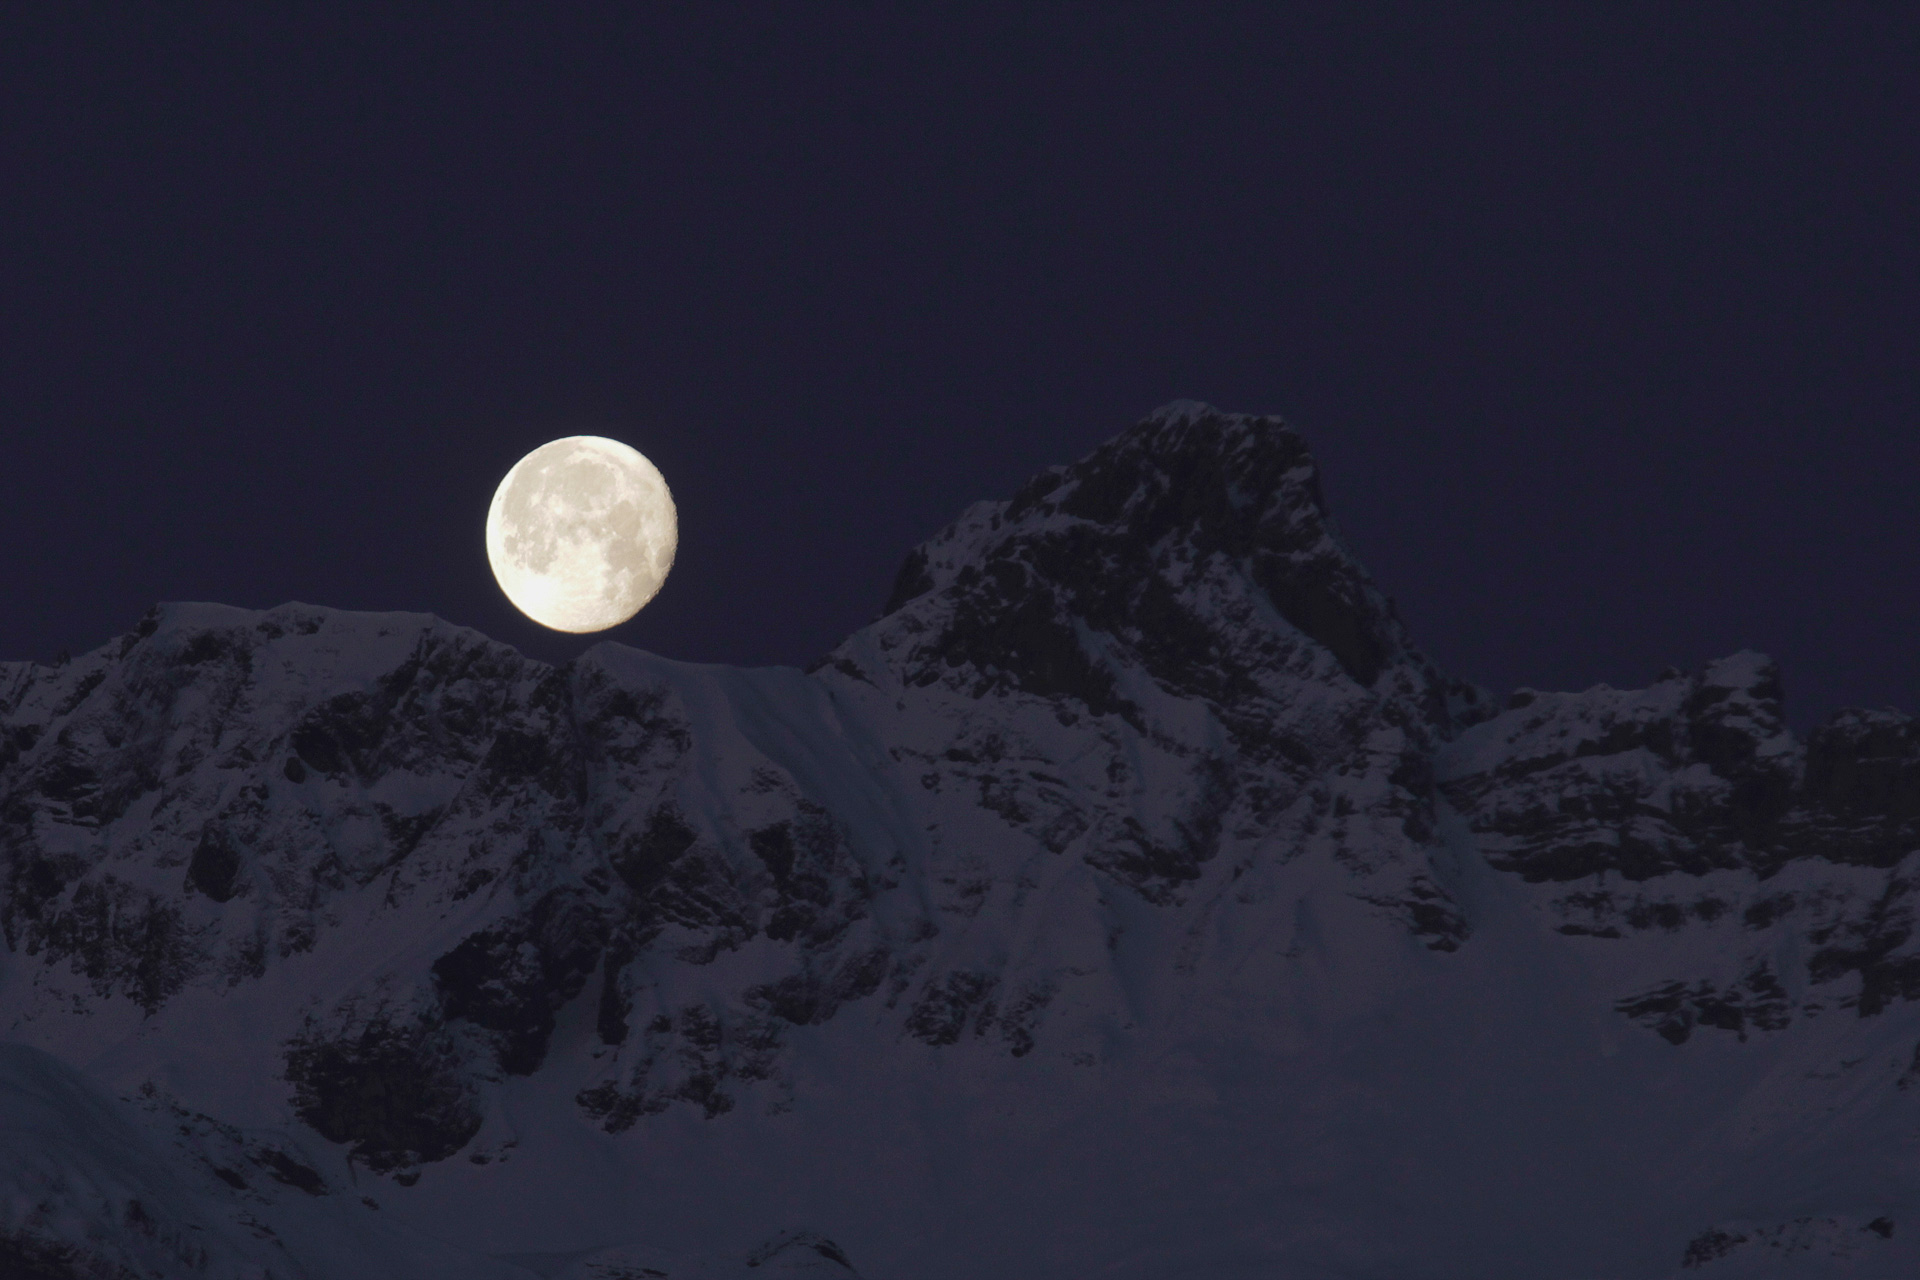 montagne-megeve-luna-notte-inverno-neve